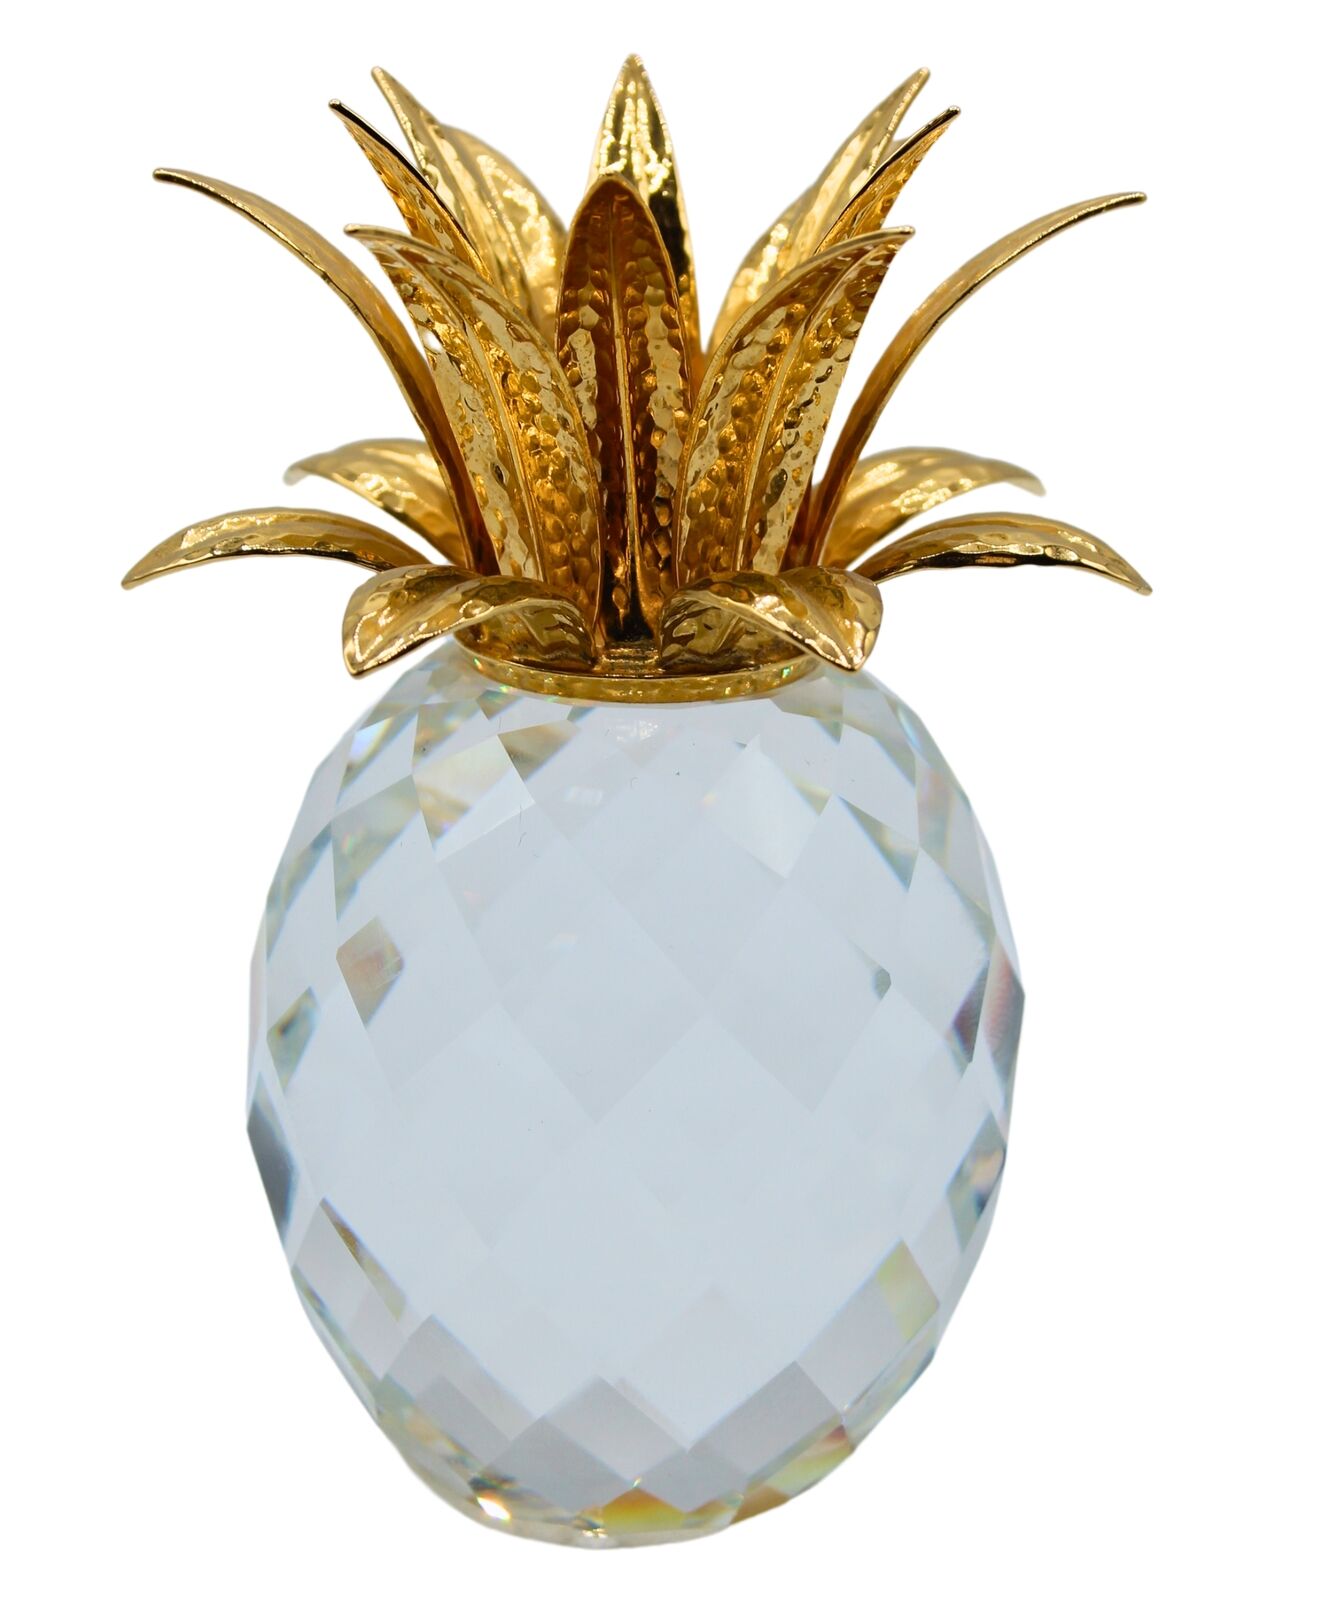 Swarovski Candle Holder: 10062 Pineapple Candleholder | Mint with Box